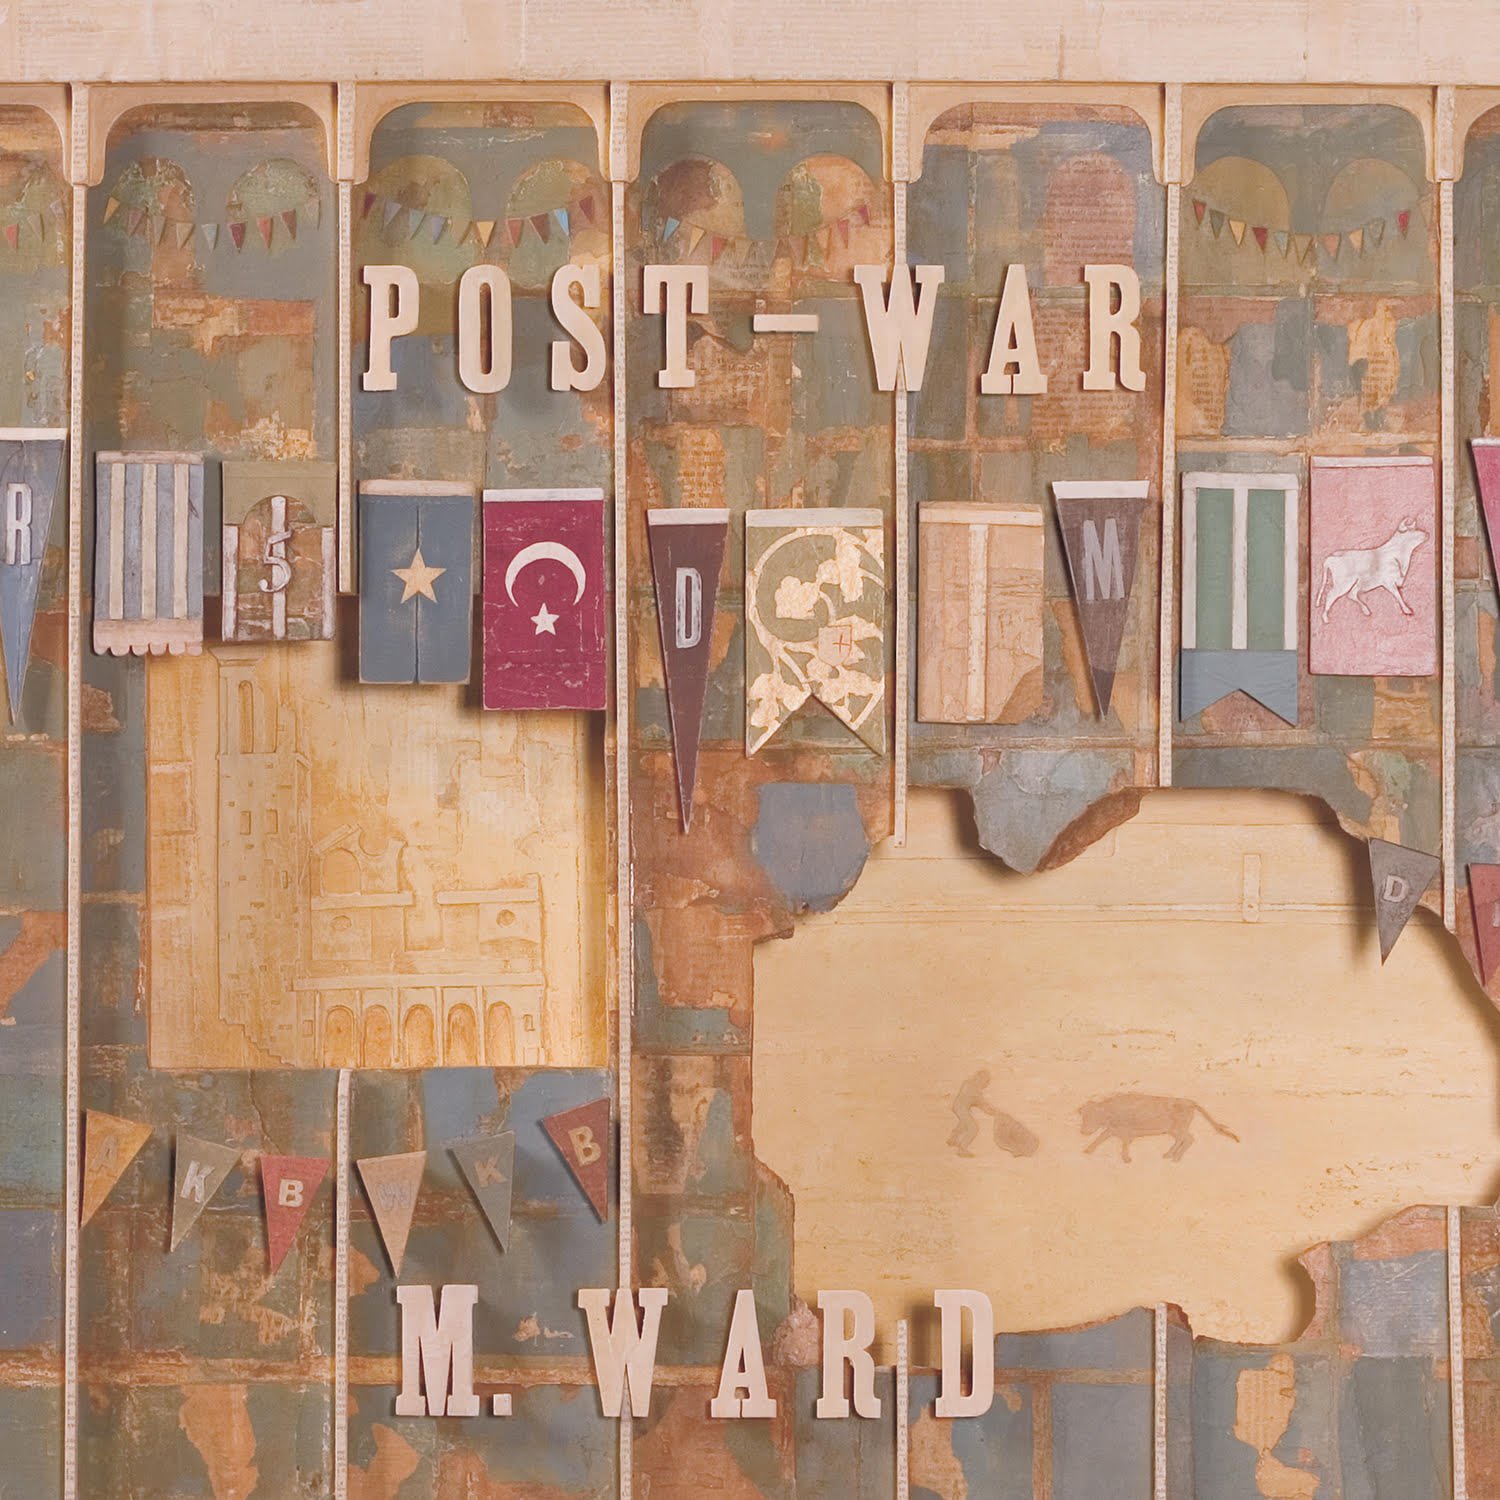 CD Shop - WARD, M. POST-WAR